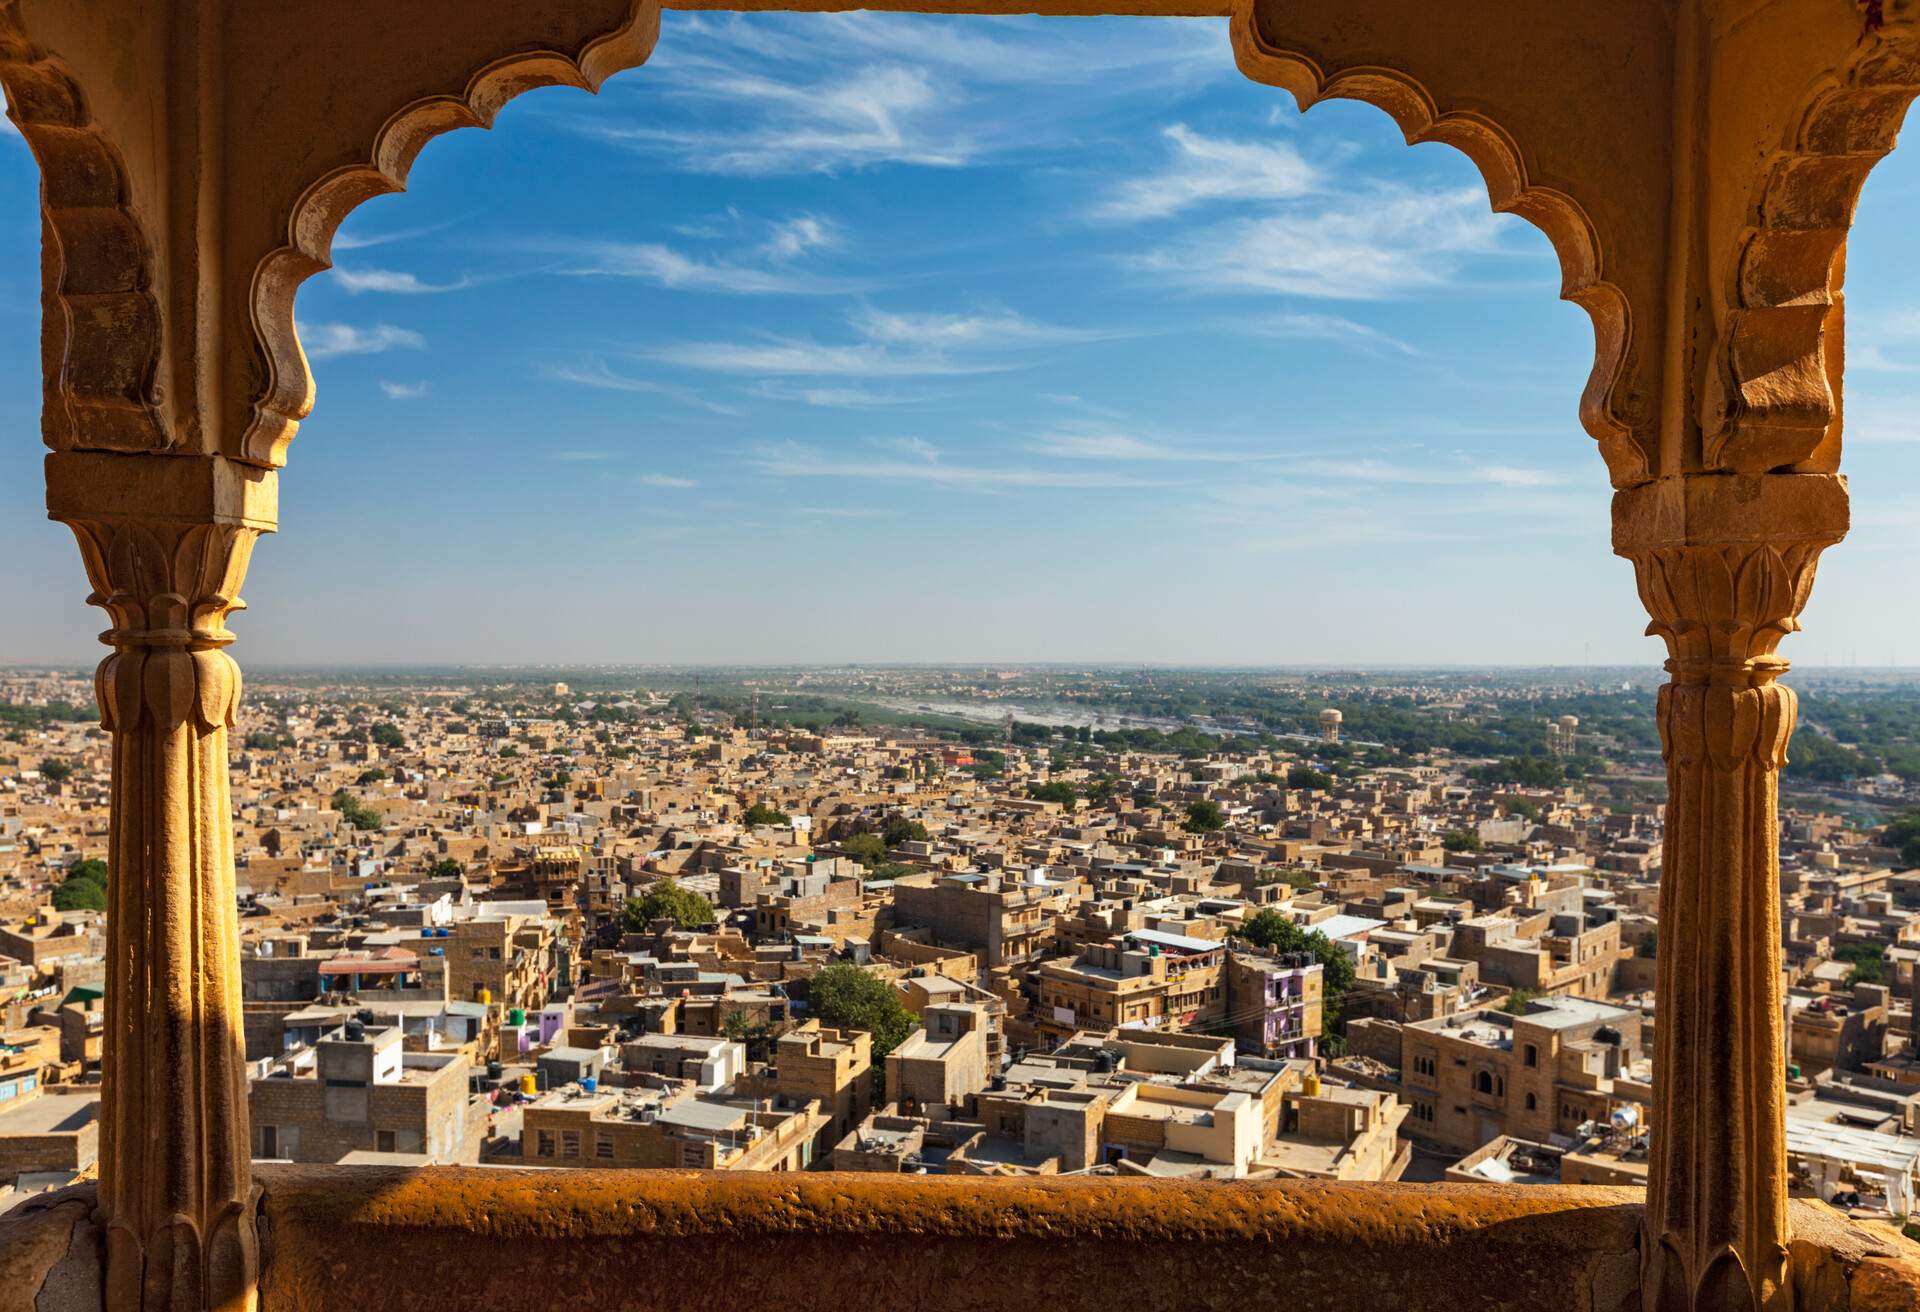 View of Jaisalmer city from Jaisalmer fort through arch. Jaisalmer, Rajasthan, India